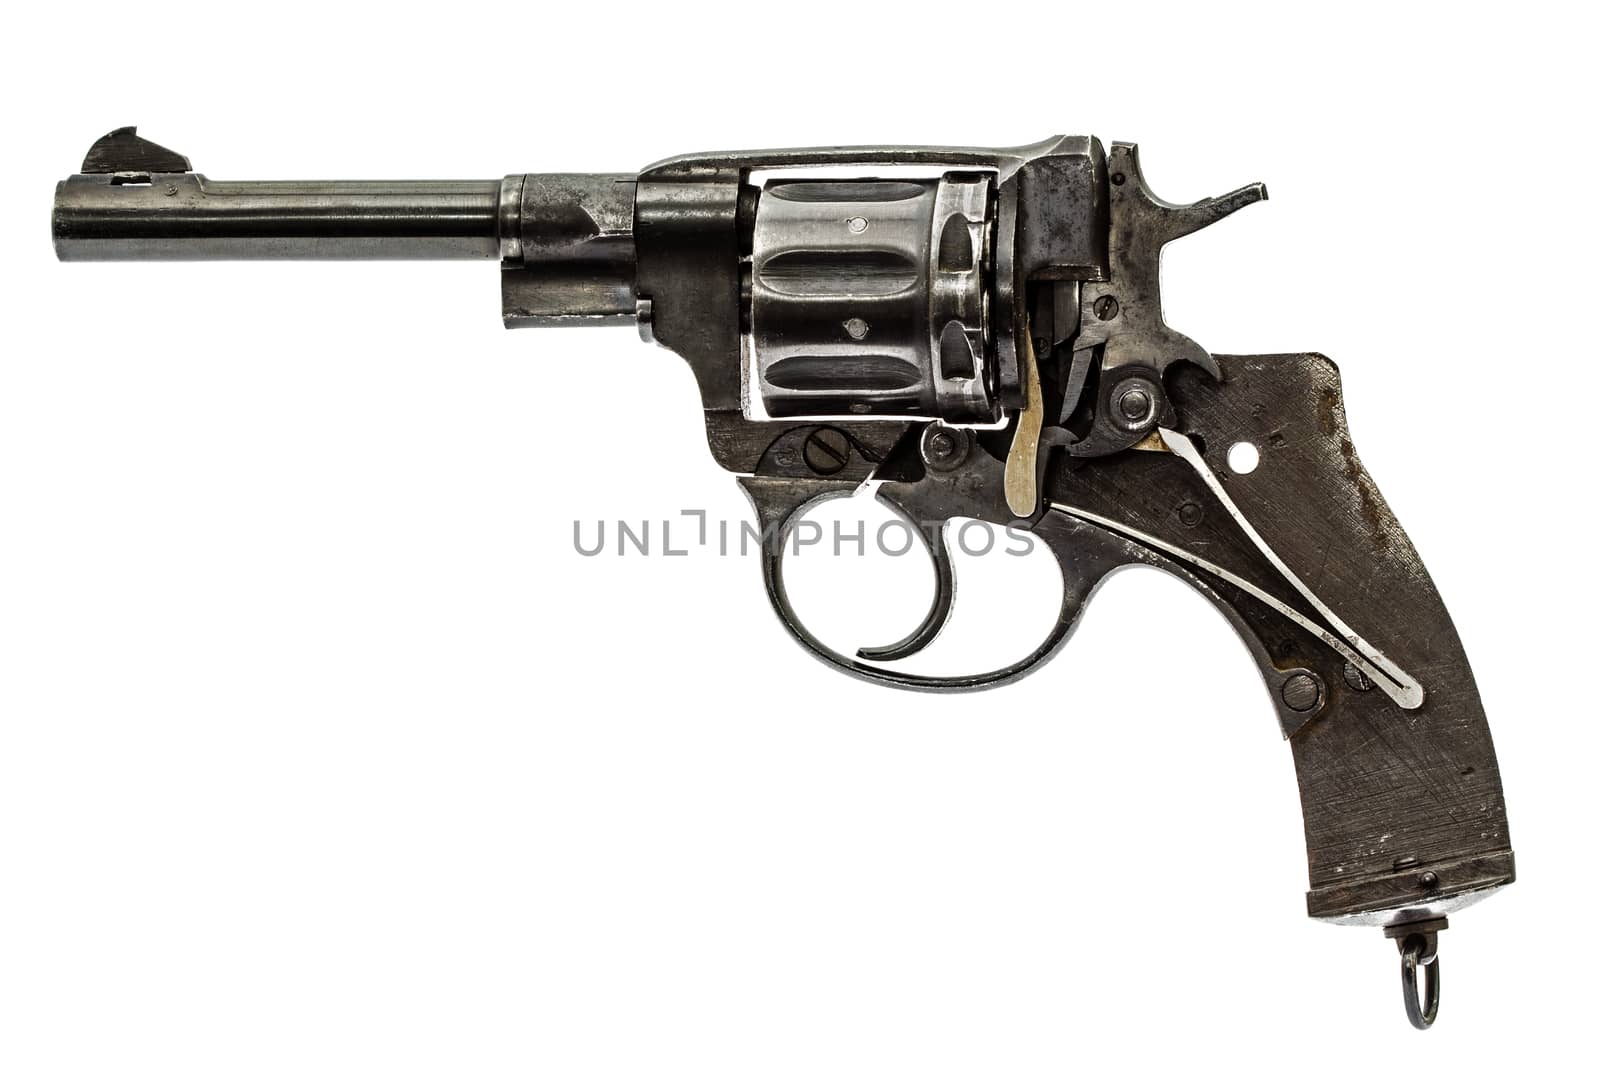 Disassembled revolver, pistol mechanism, isolated on white background